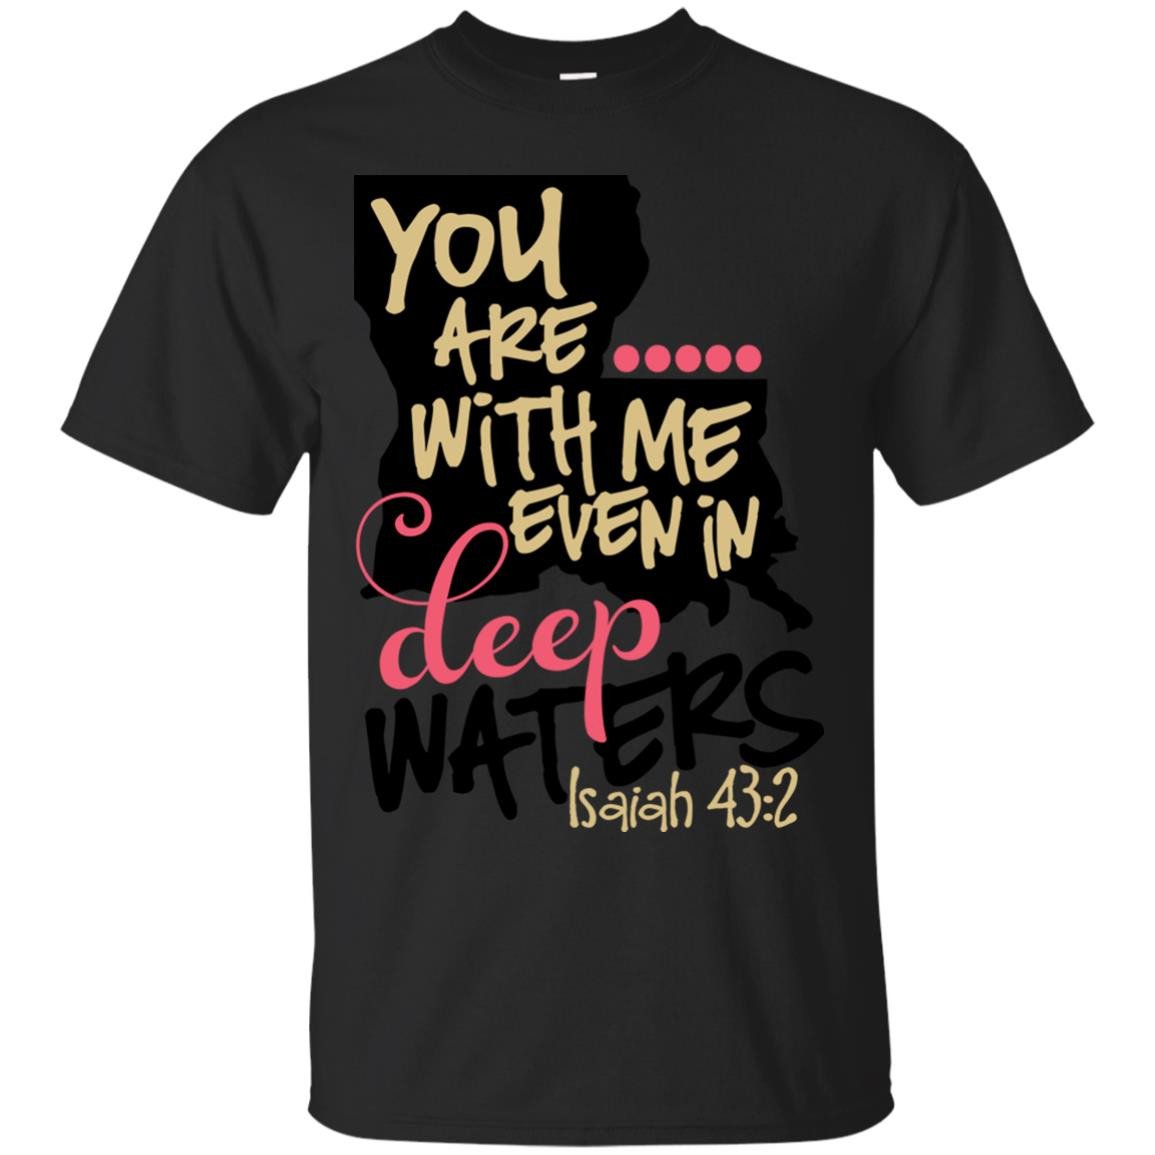 Isaiah 43:2 Louisiana Themed Bible Verse T-shirt